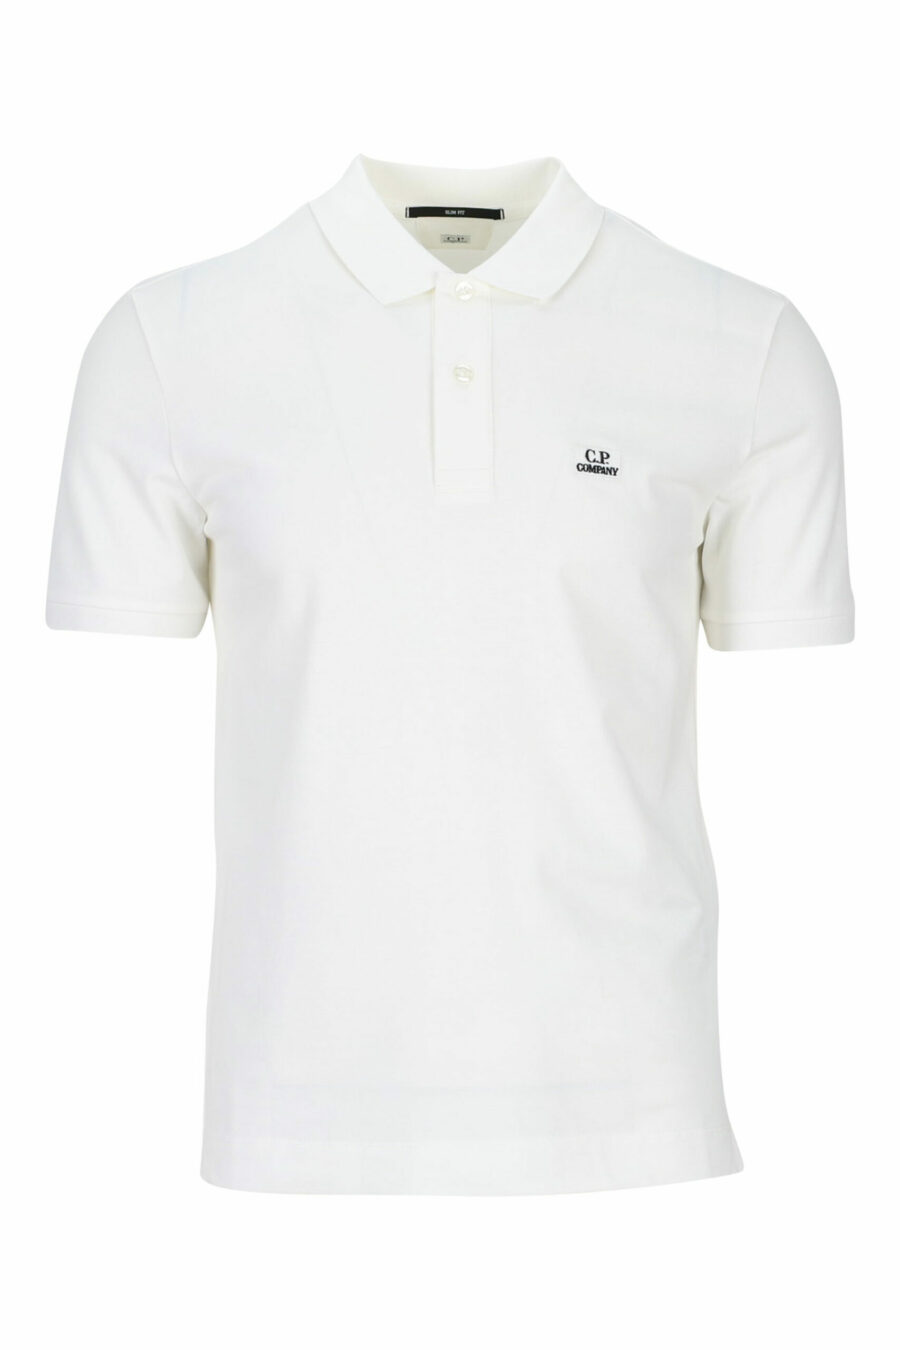 Weißes Poloshirt mit Mini-Logoaufnäher - 7620943564679 skaliert